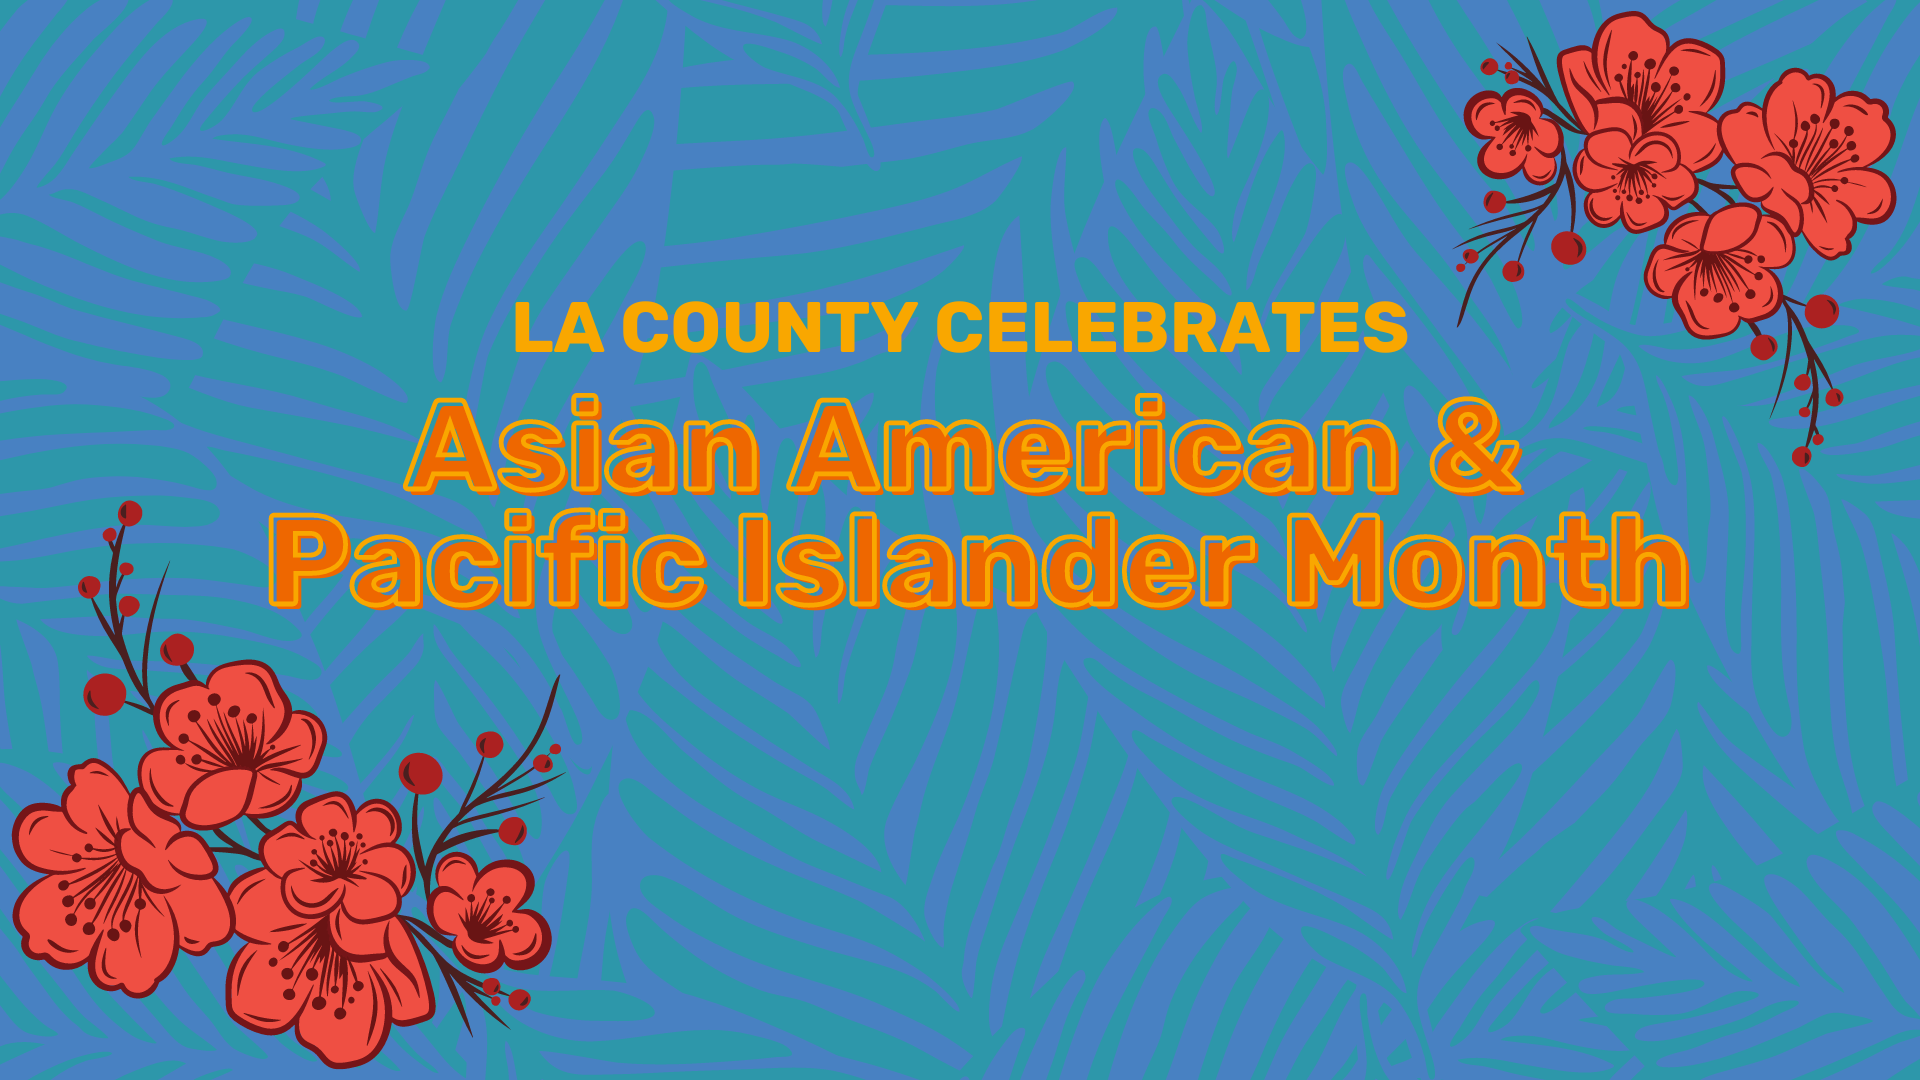 LA County celebrates Asian American and Pacific Islander Month.